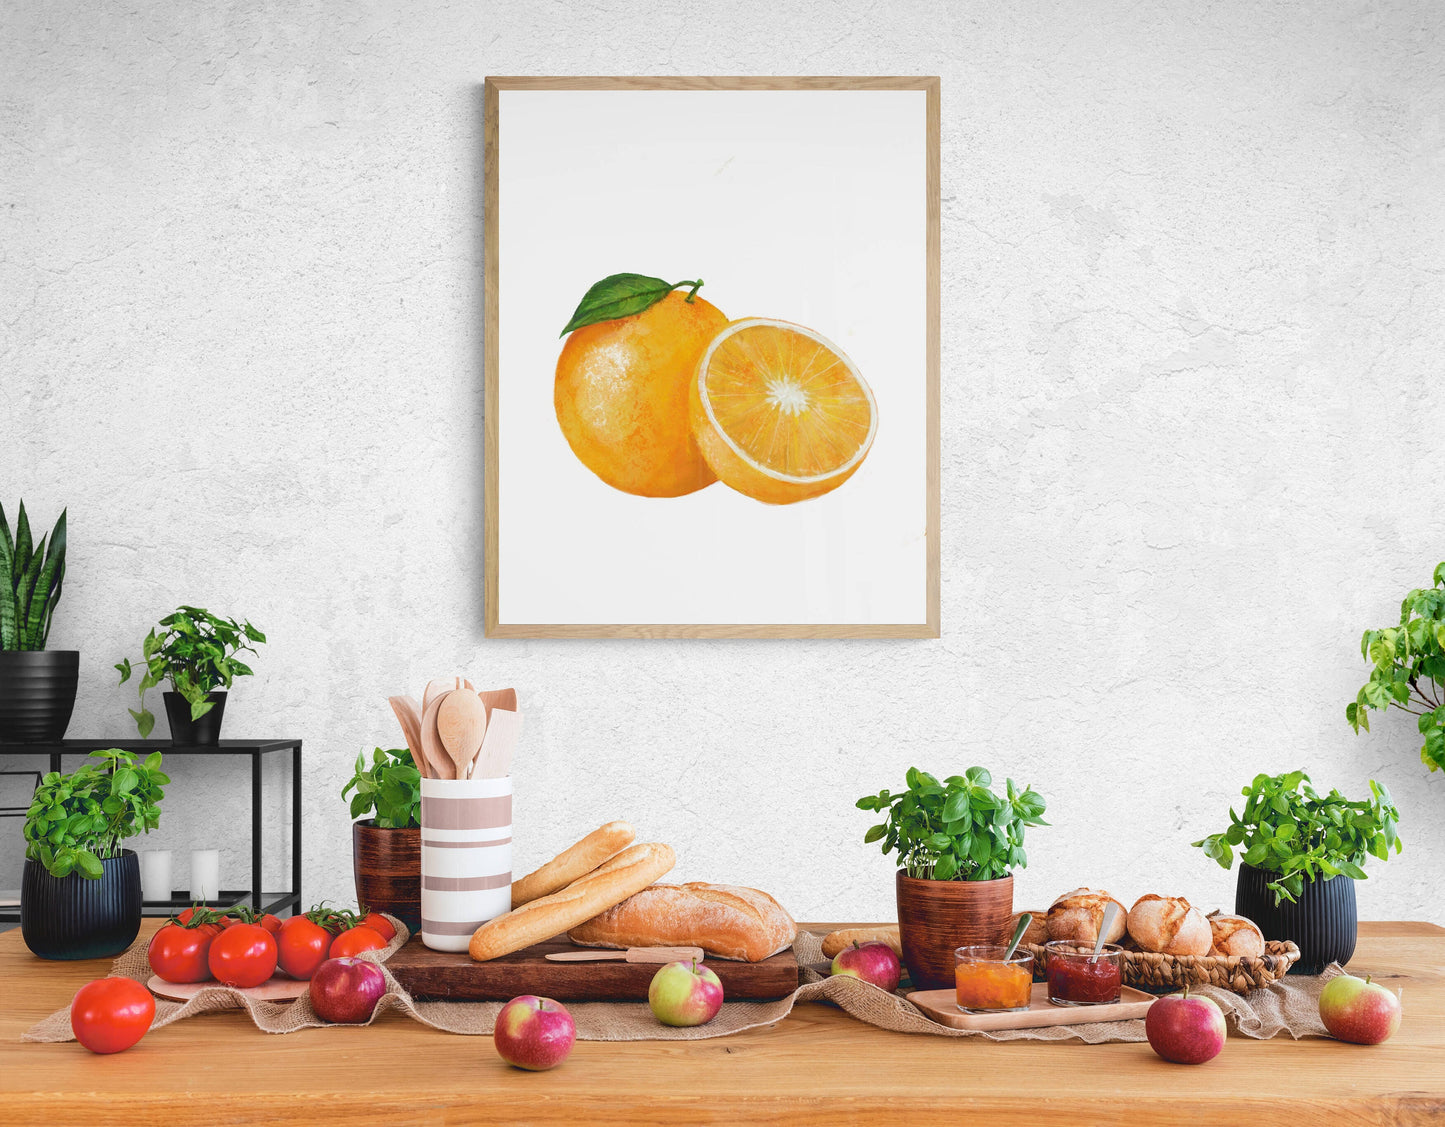 Orange Art Print, Fresh Orange Wall Art, Kitchen Wall Hanging, Dining Room Decor, Citrus Painting, Fruit Illustration, Farmhouse Wall Decor